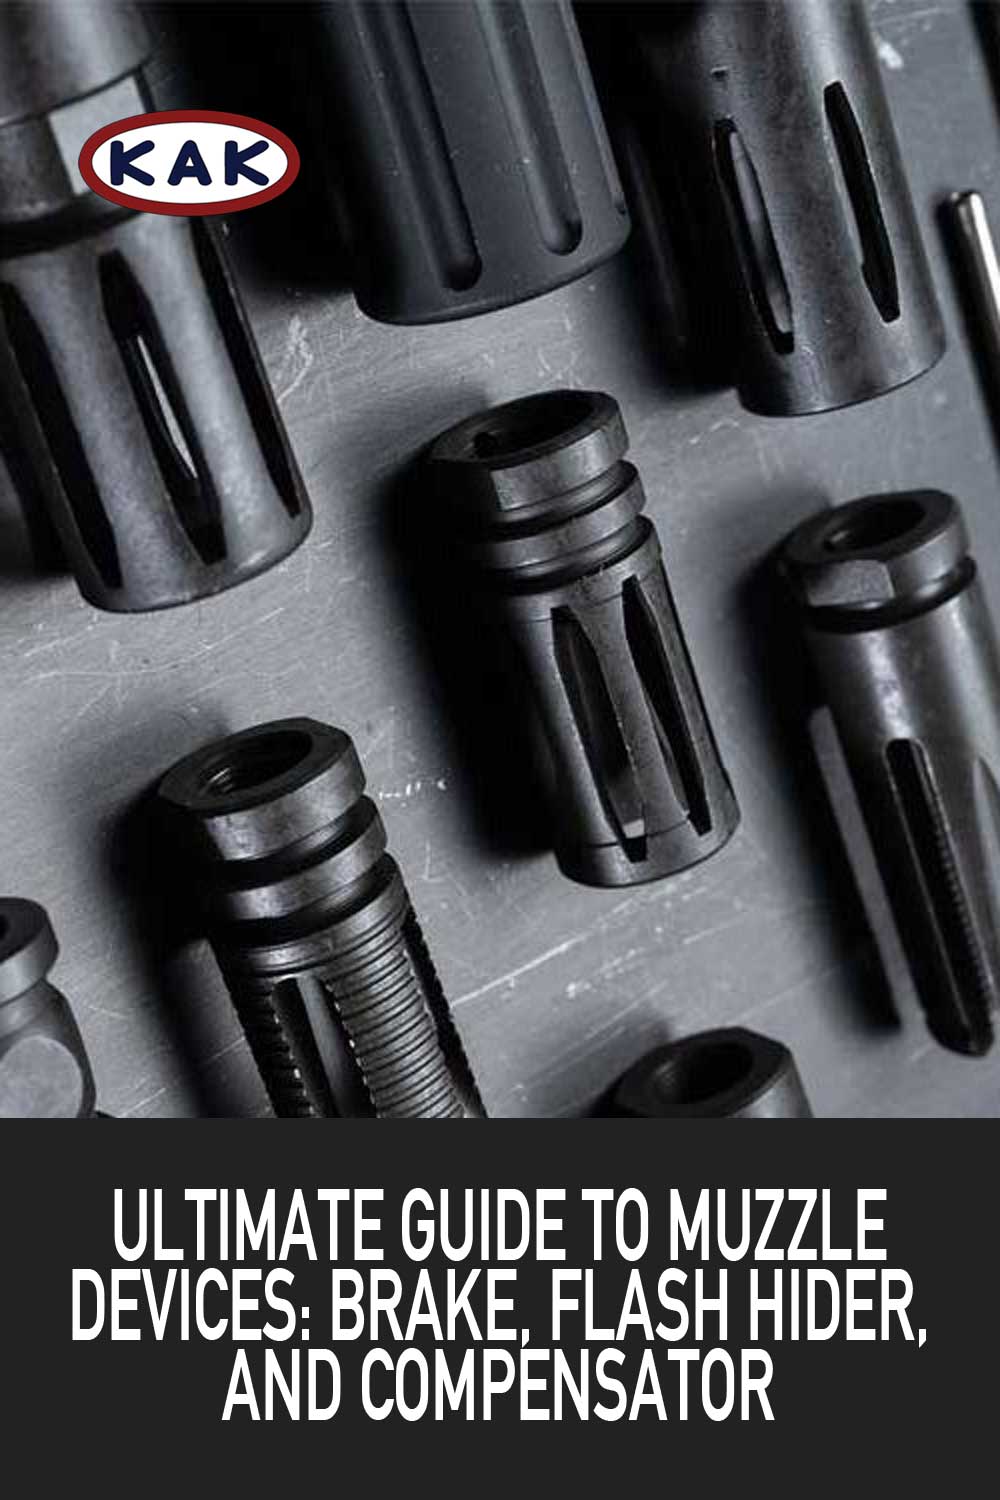 Muzzle Brakes, Flash Hiders, and compensators